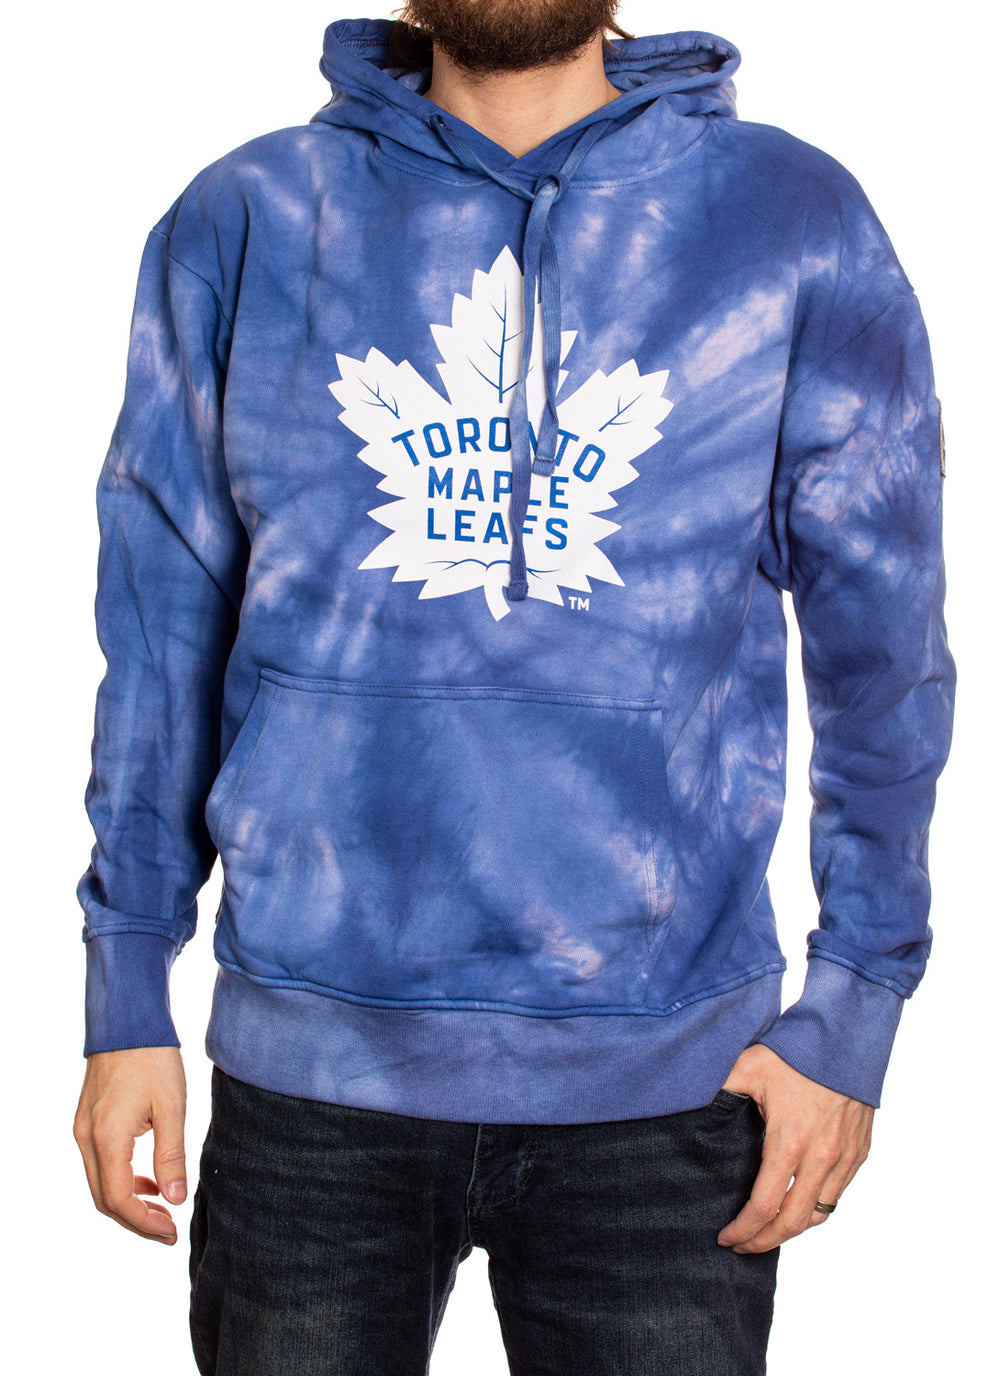 Go leafs go Toronto maple leafs hockey shirt - Guineashirt Premium